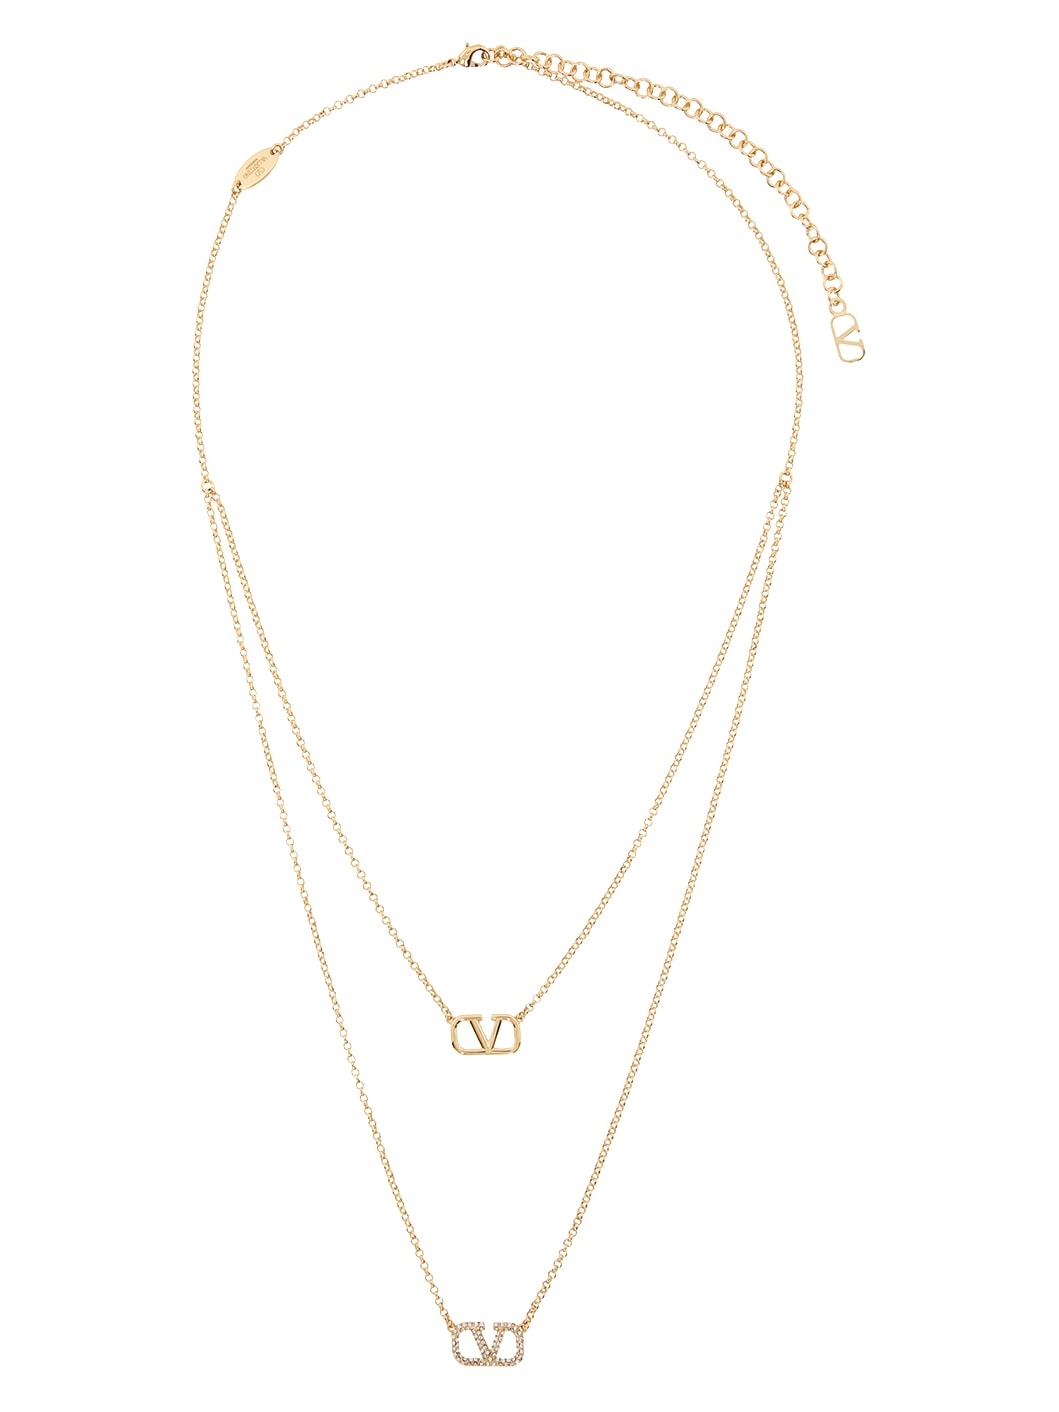 Gold VLogo Signature Necklace - 1